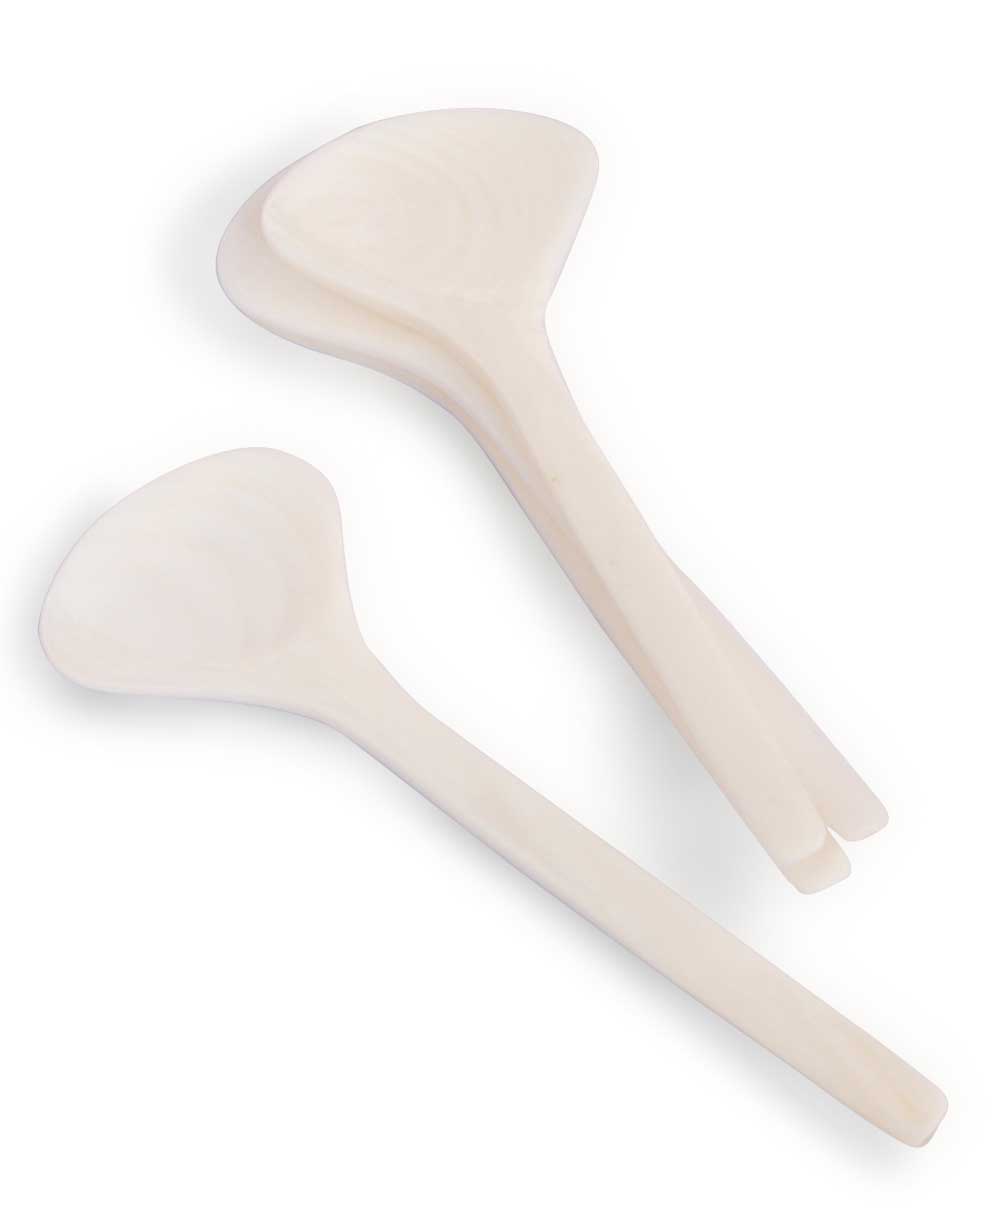 Oval Seashell Spoons